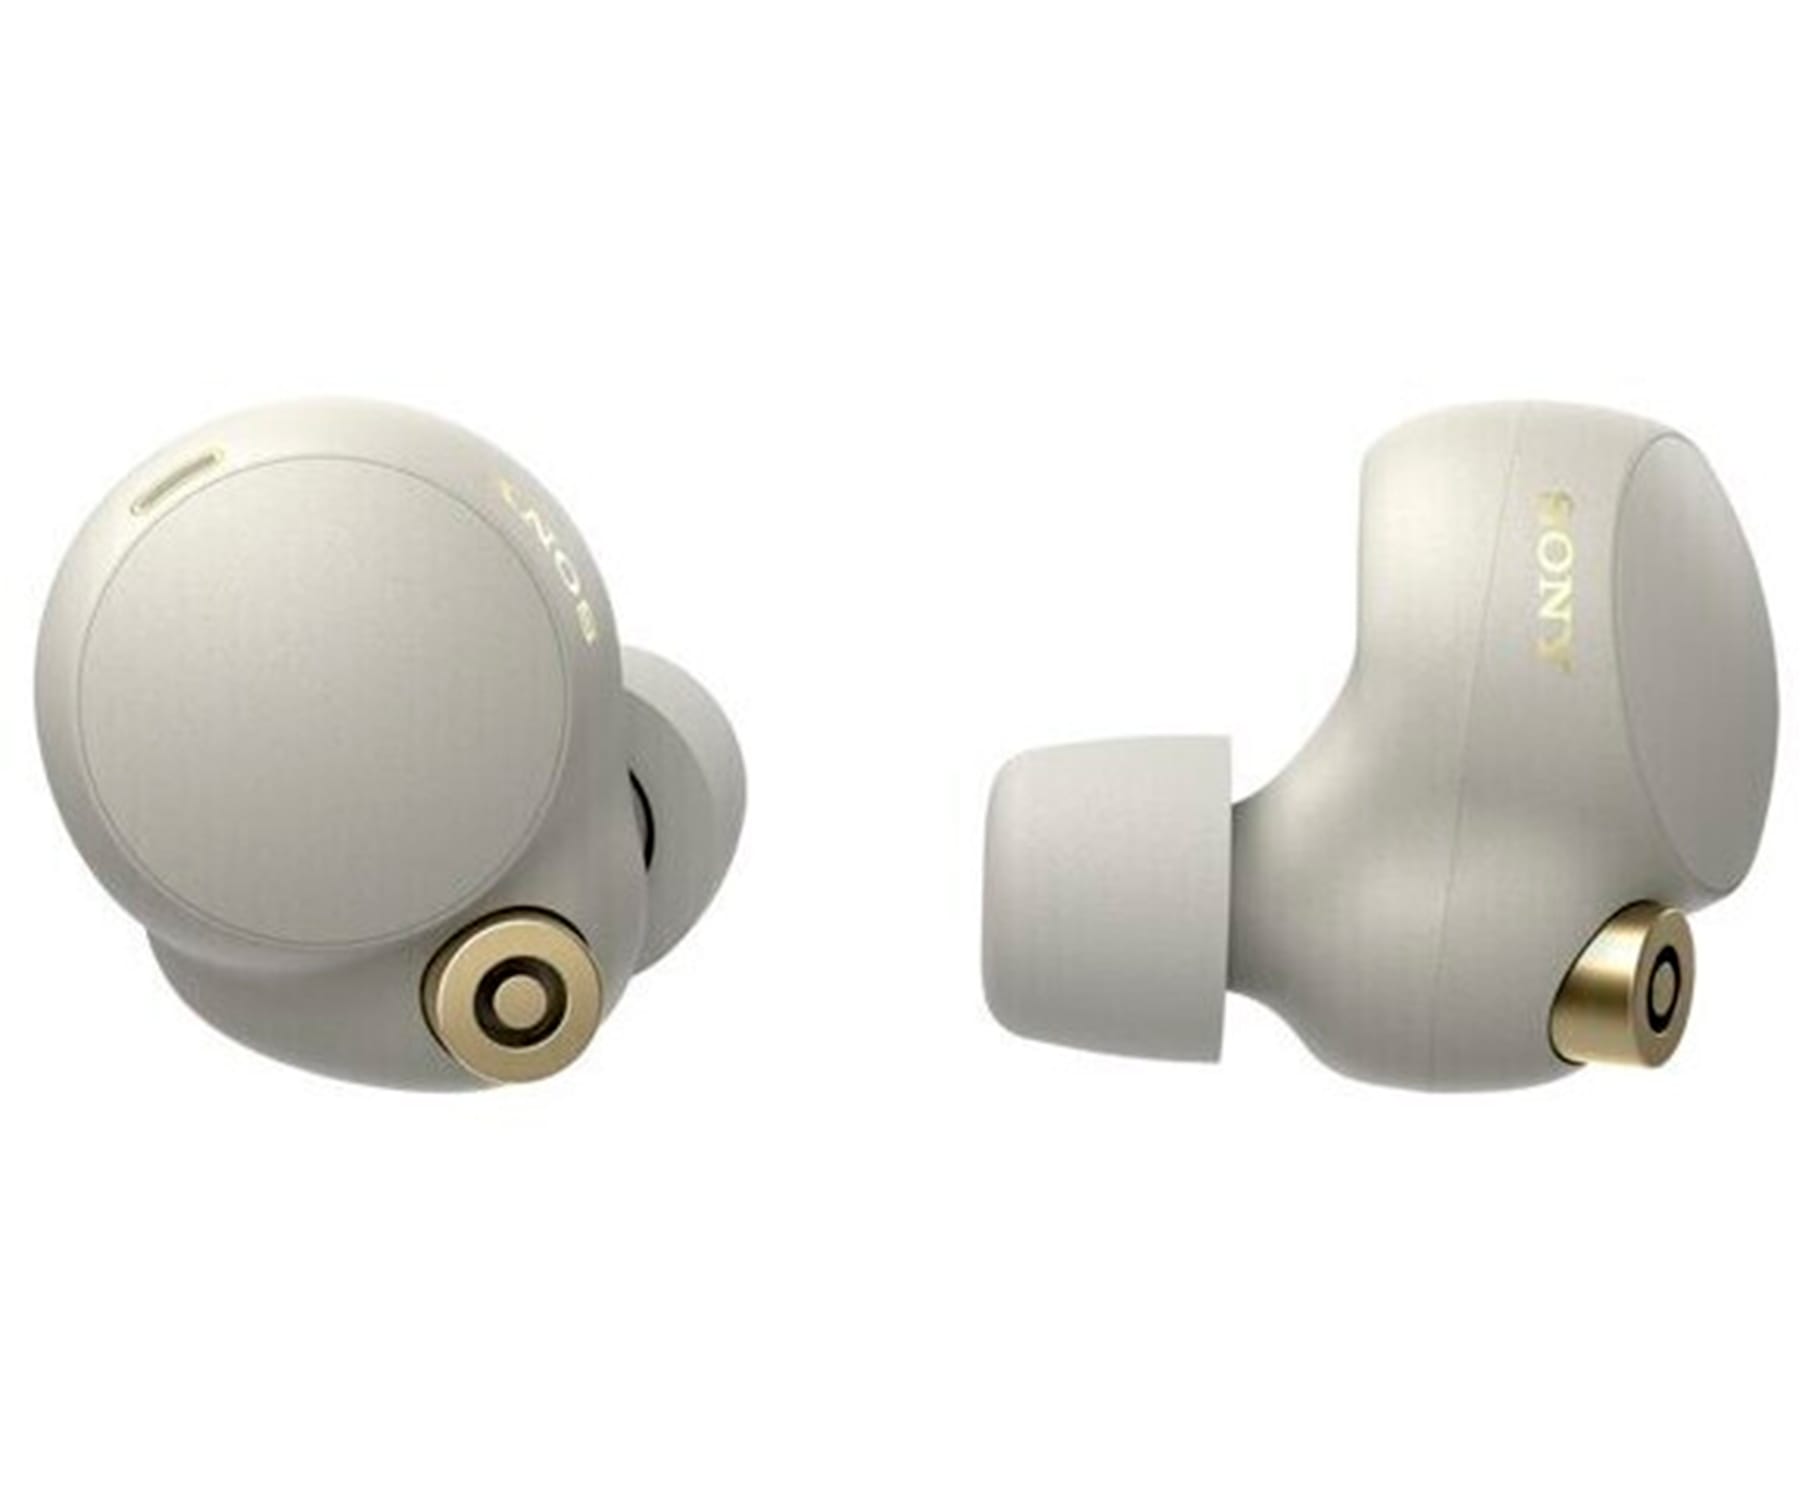 SONY WF-1000XM4 Silver / Reacondicionados / Auriculares InEar True Wireless  - Outlet Gallery